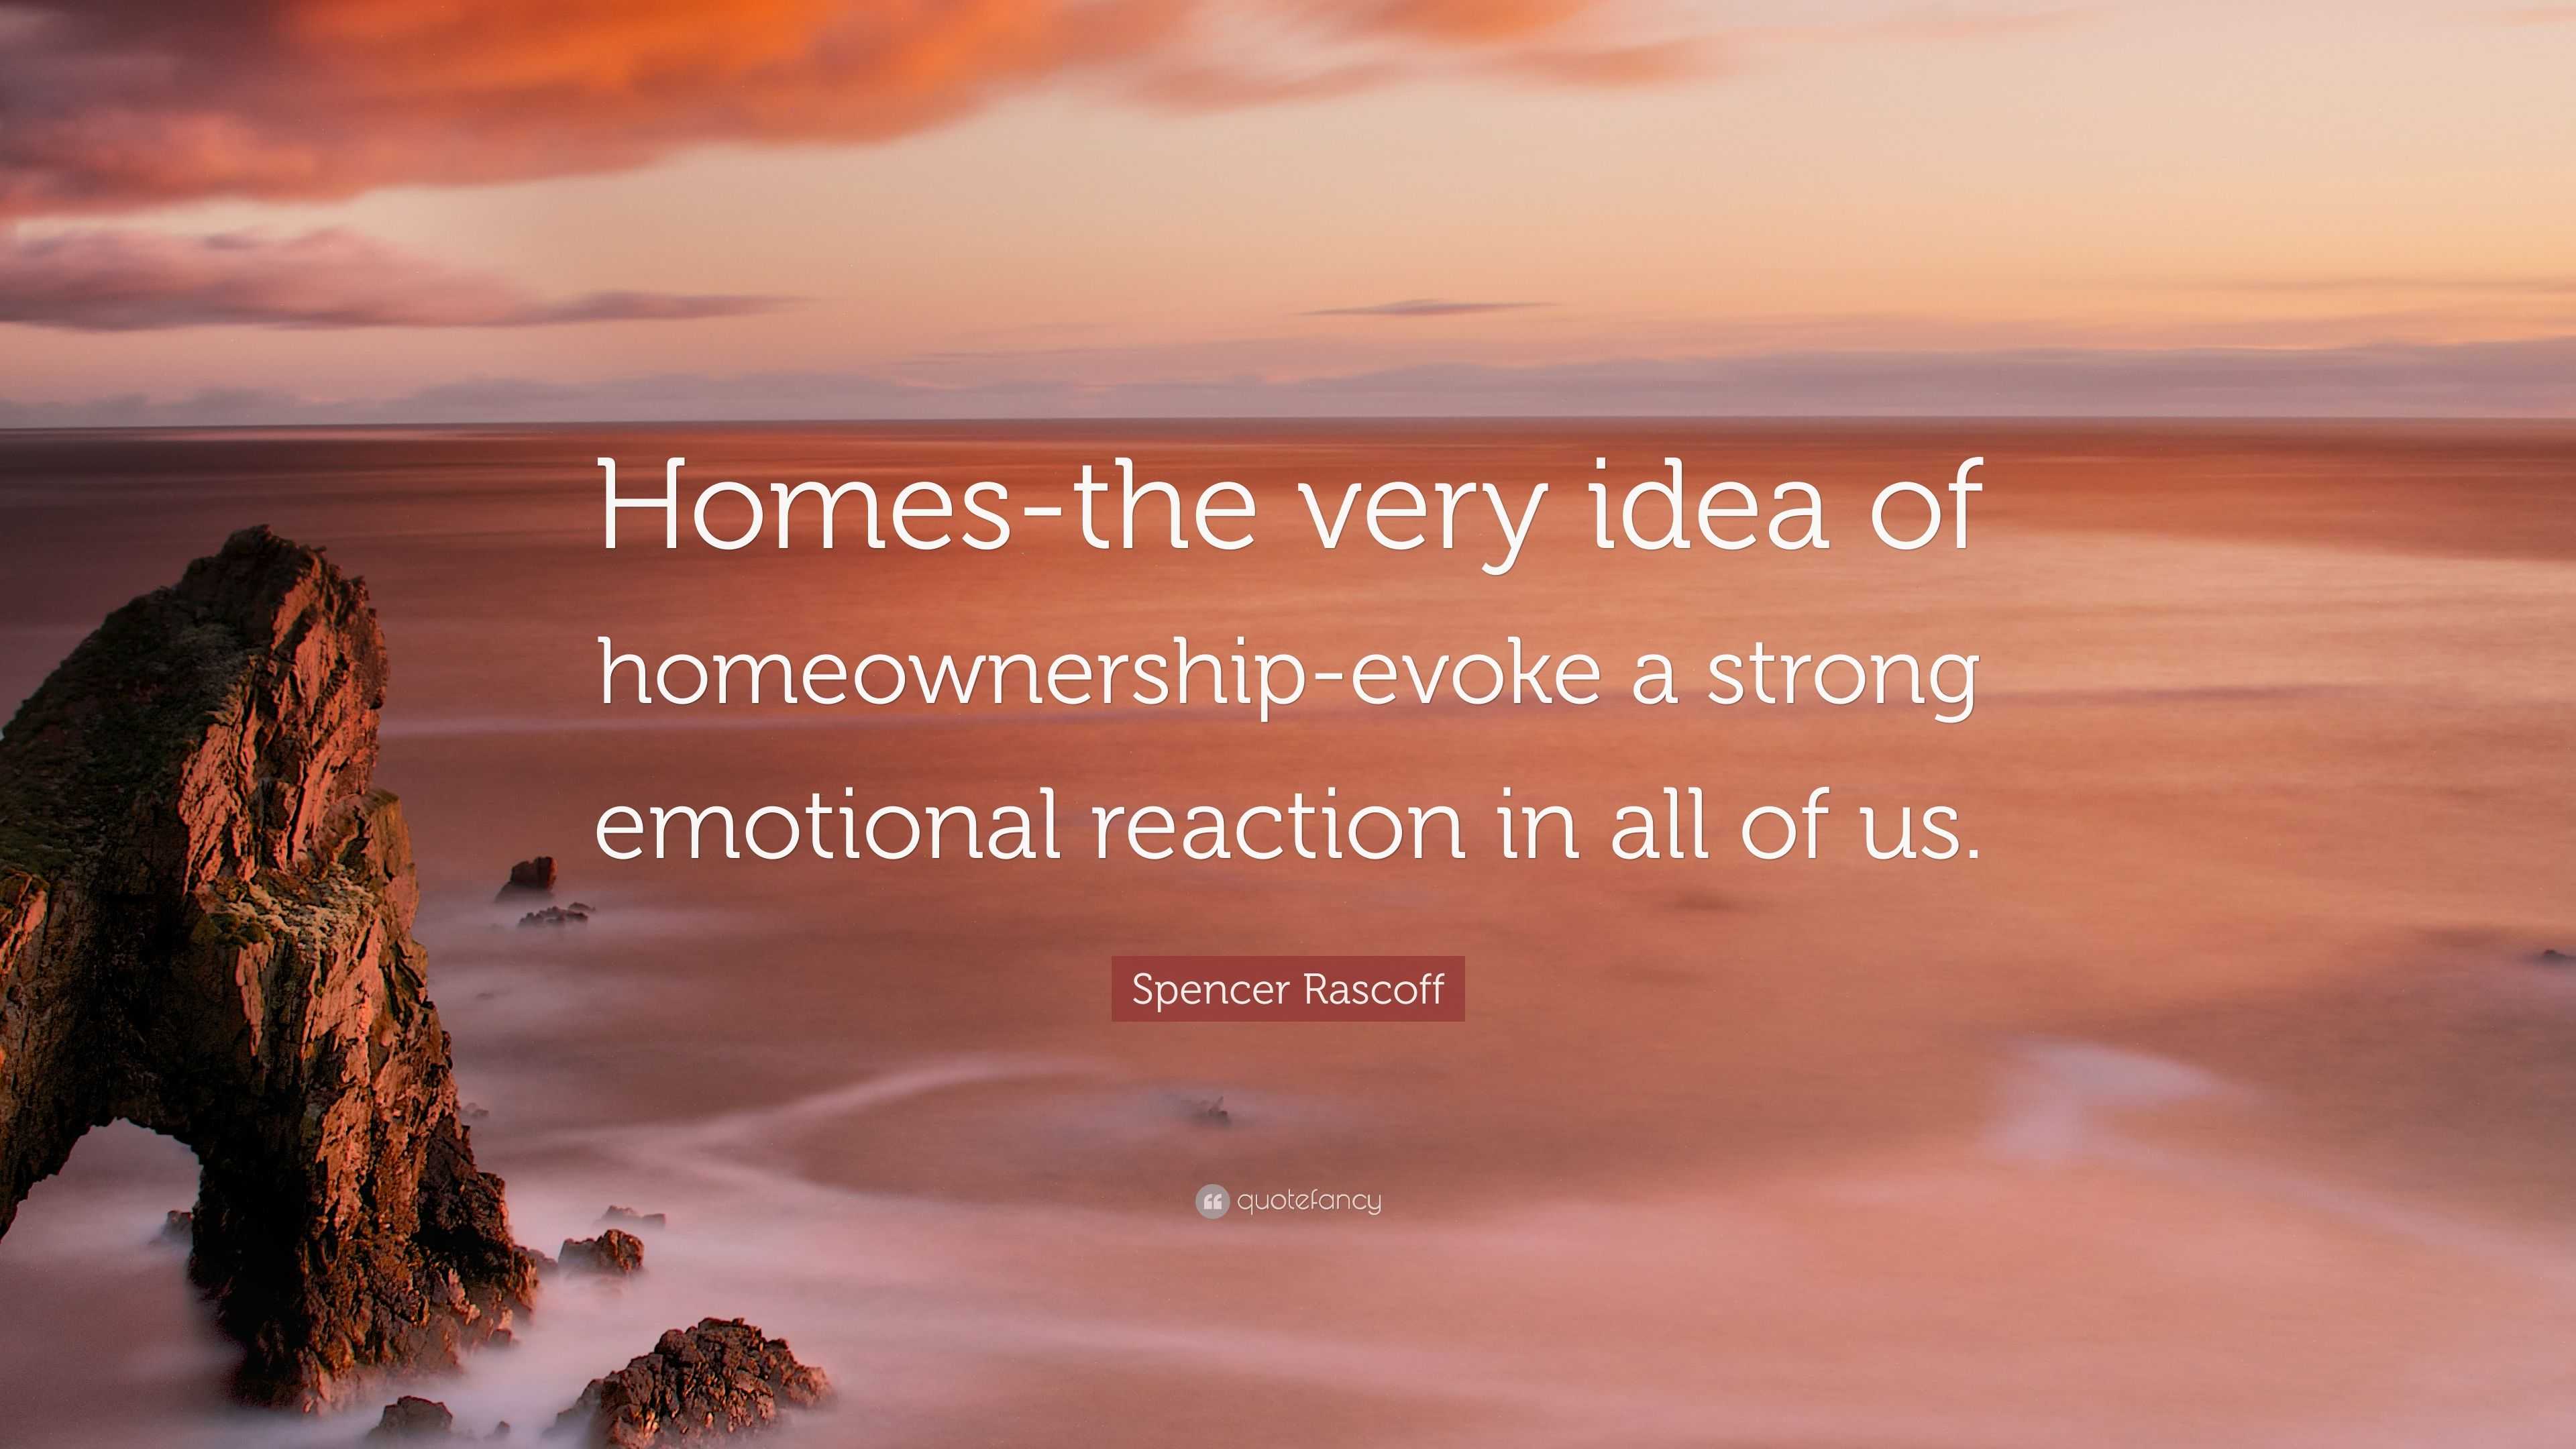 Spencer Rascoff Quote: “Homes-the very idea of homeownership-evoke a ...
